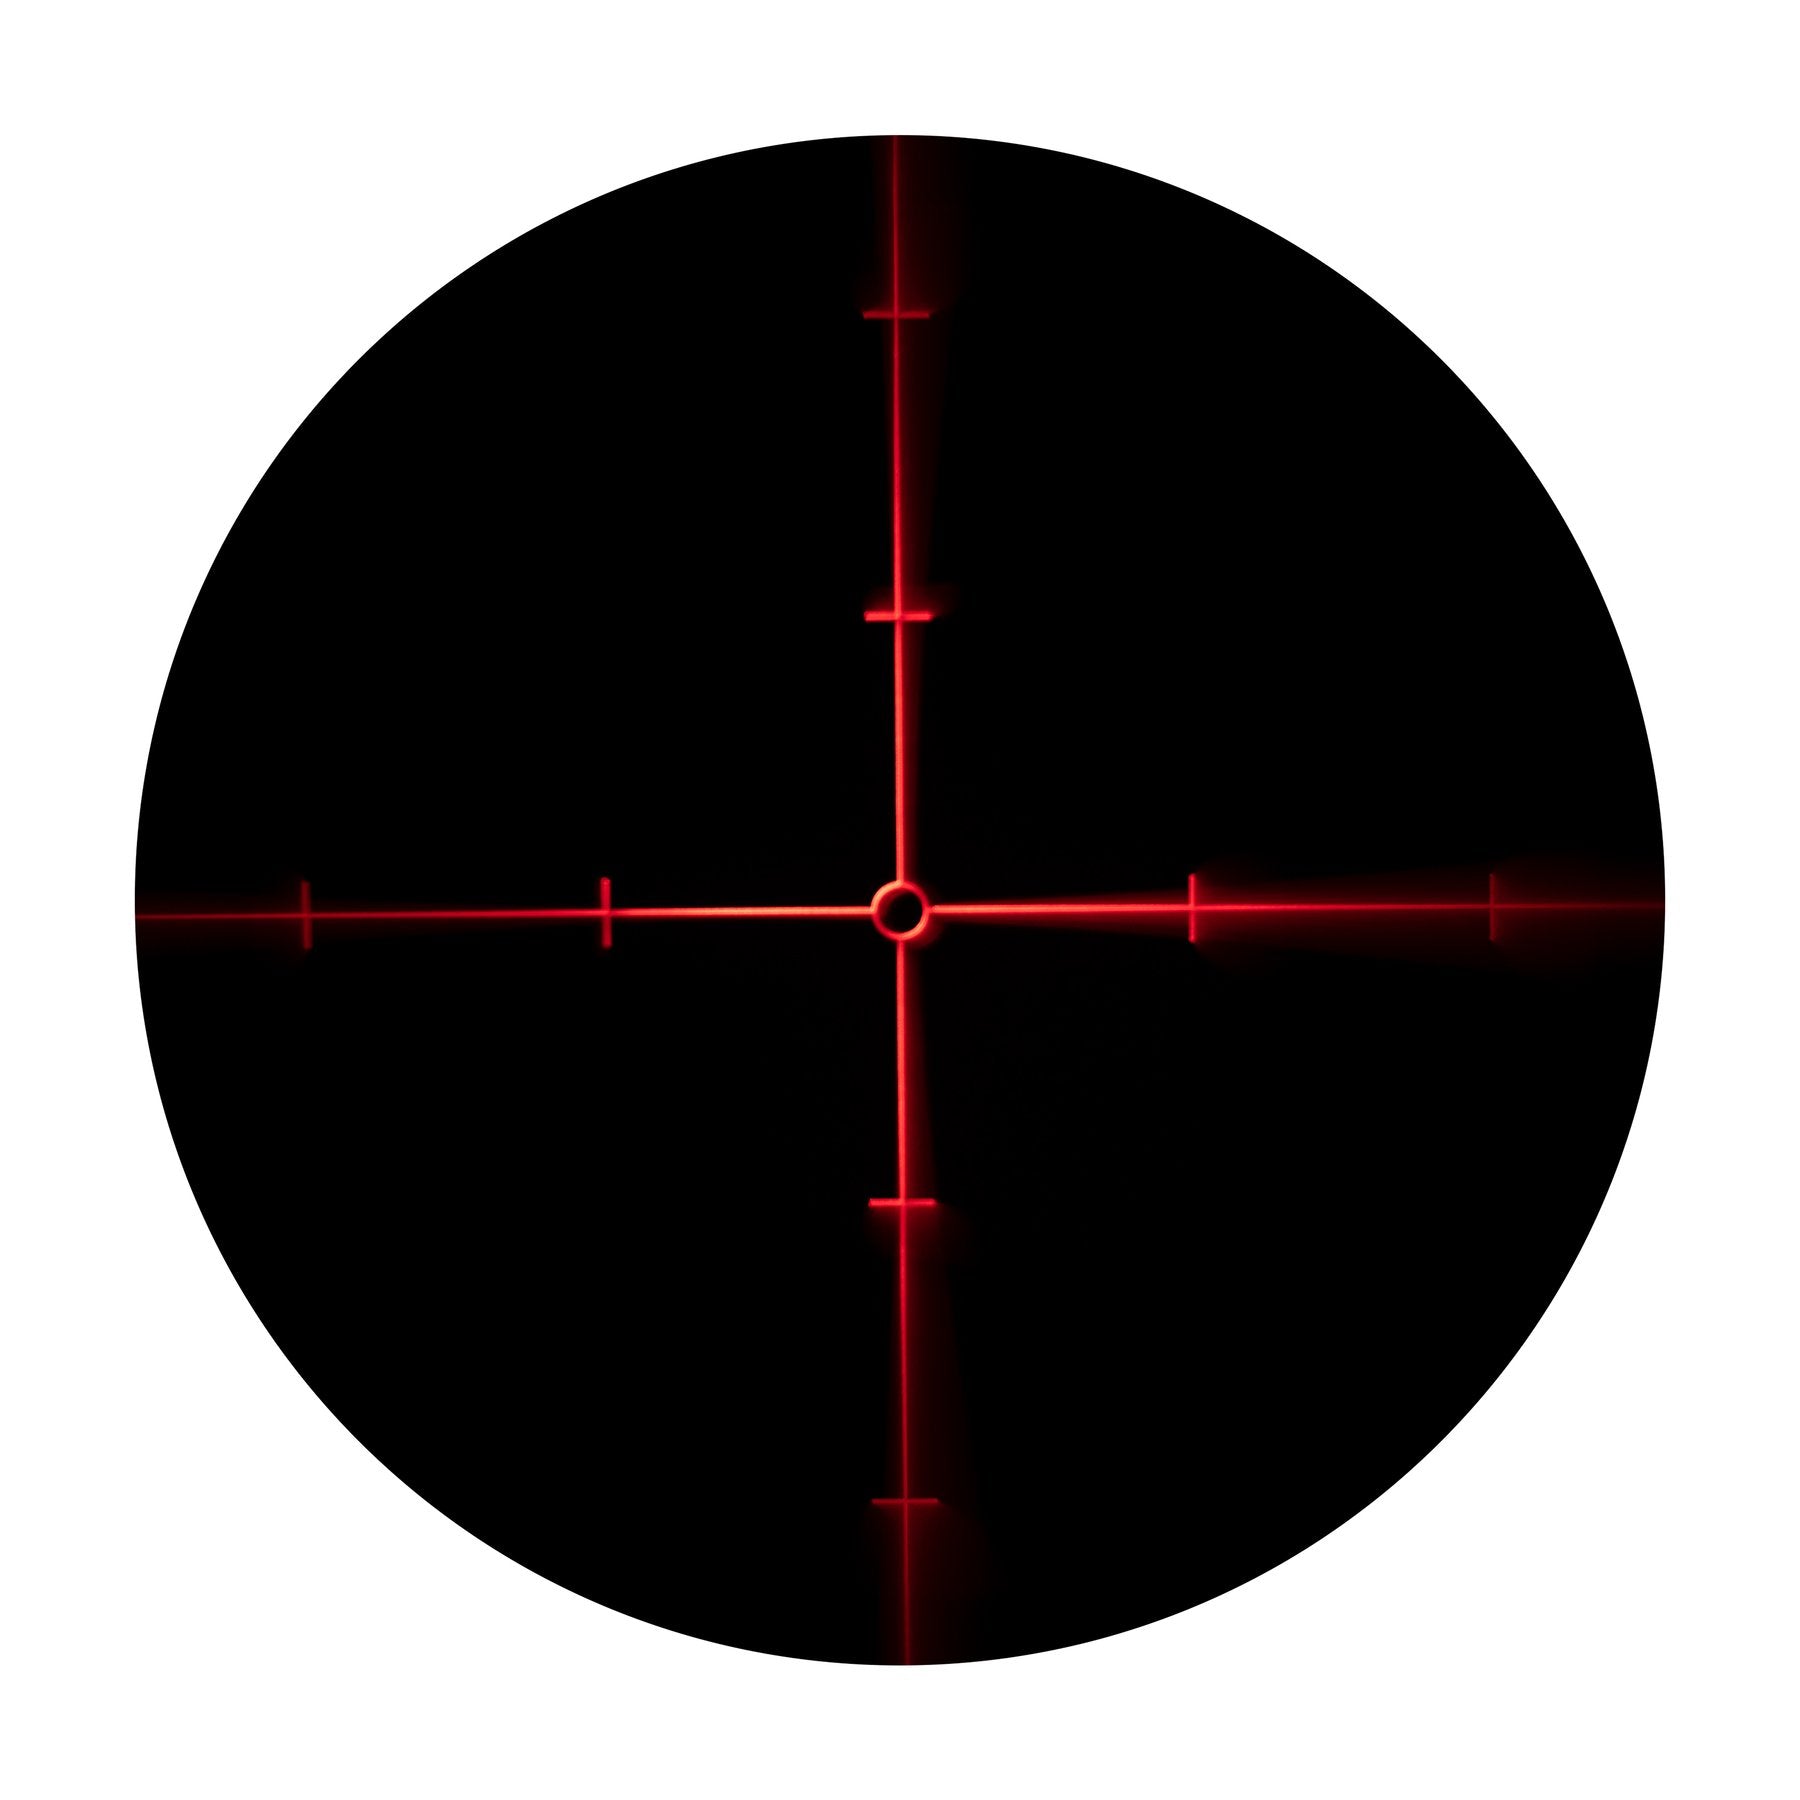 Explore Scientific 8x50mm Illuminated Viewfinder with Bracket-VFEI0850-01 - CoreScientifics- Hobby Optics